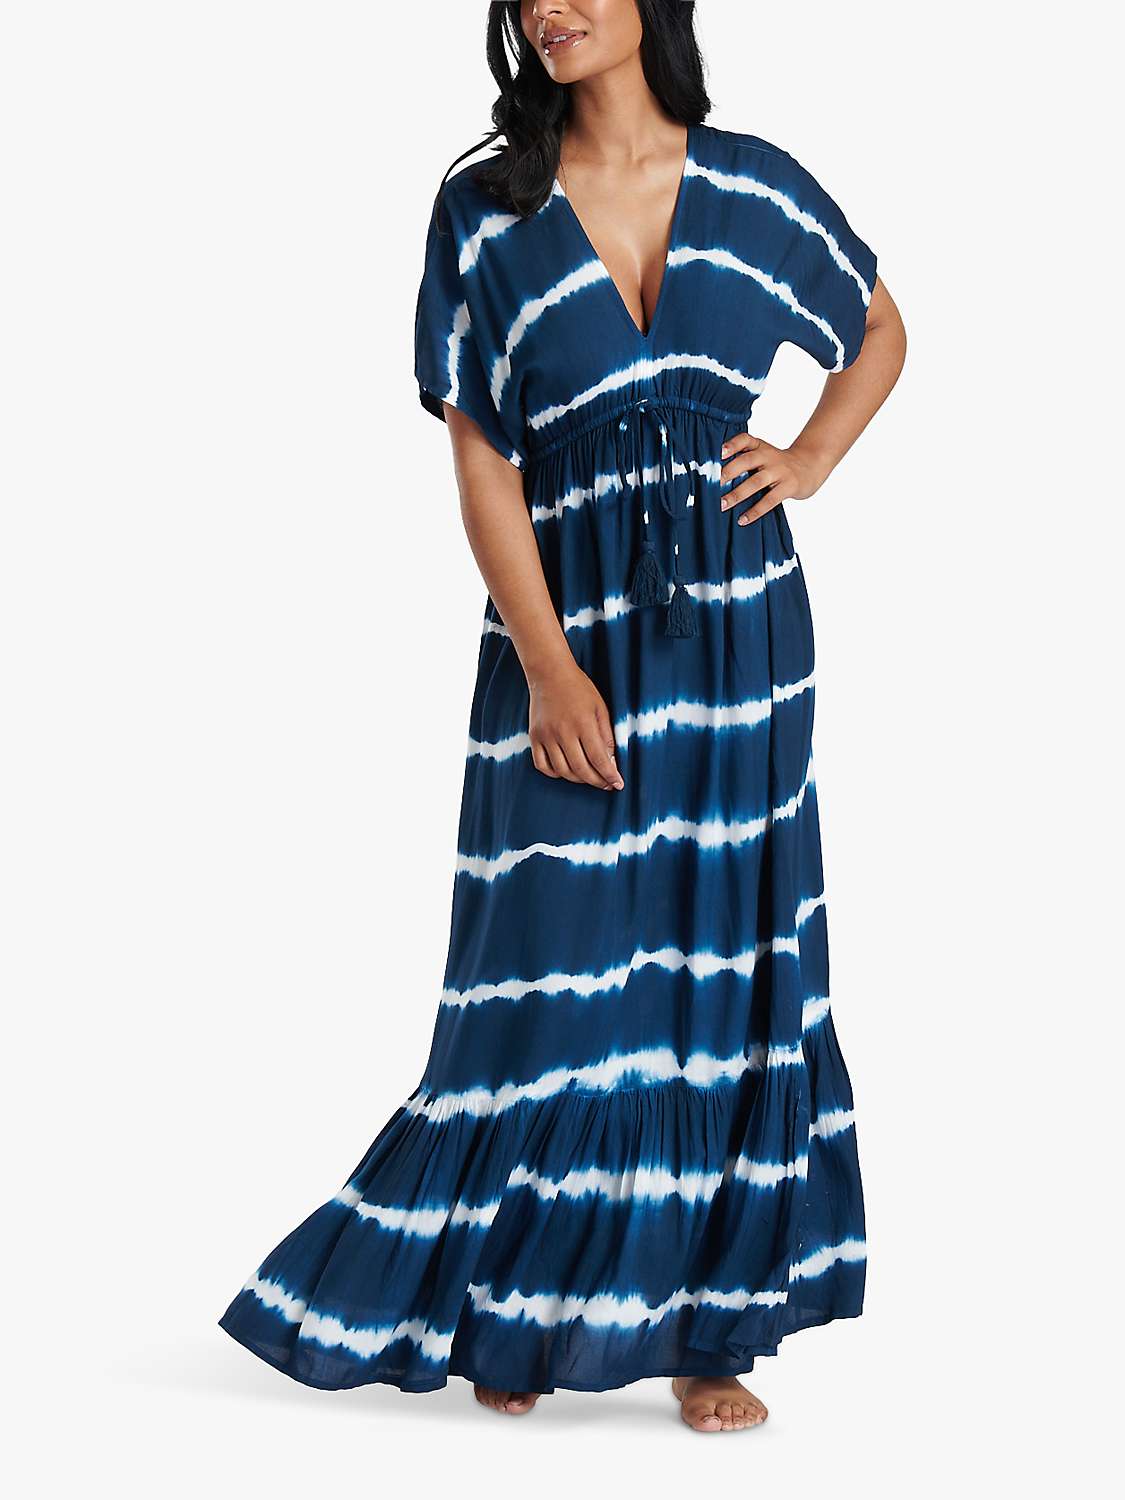 Buy South Beach V-Neck Tie Dye Maxi Dress, Navy/White Online at johnlewis.com